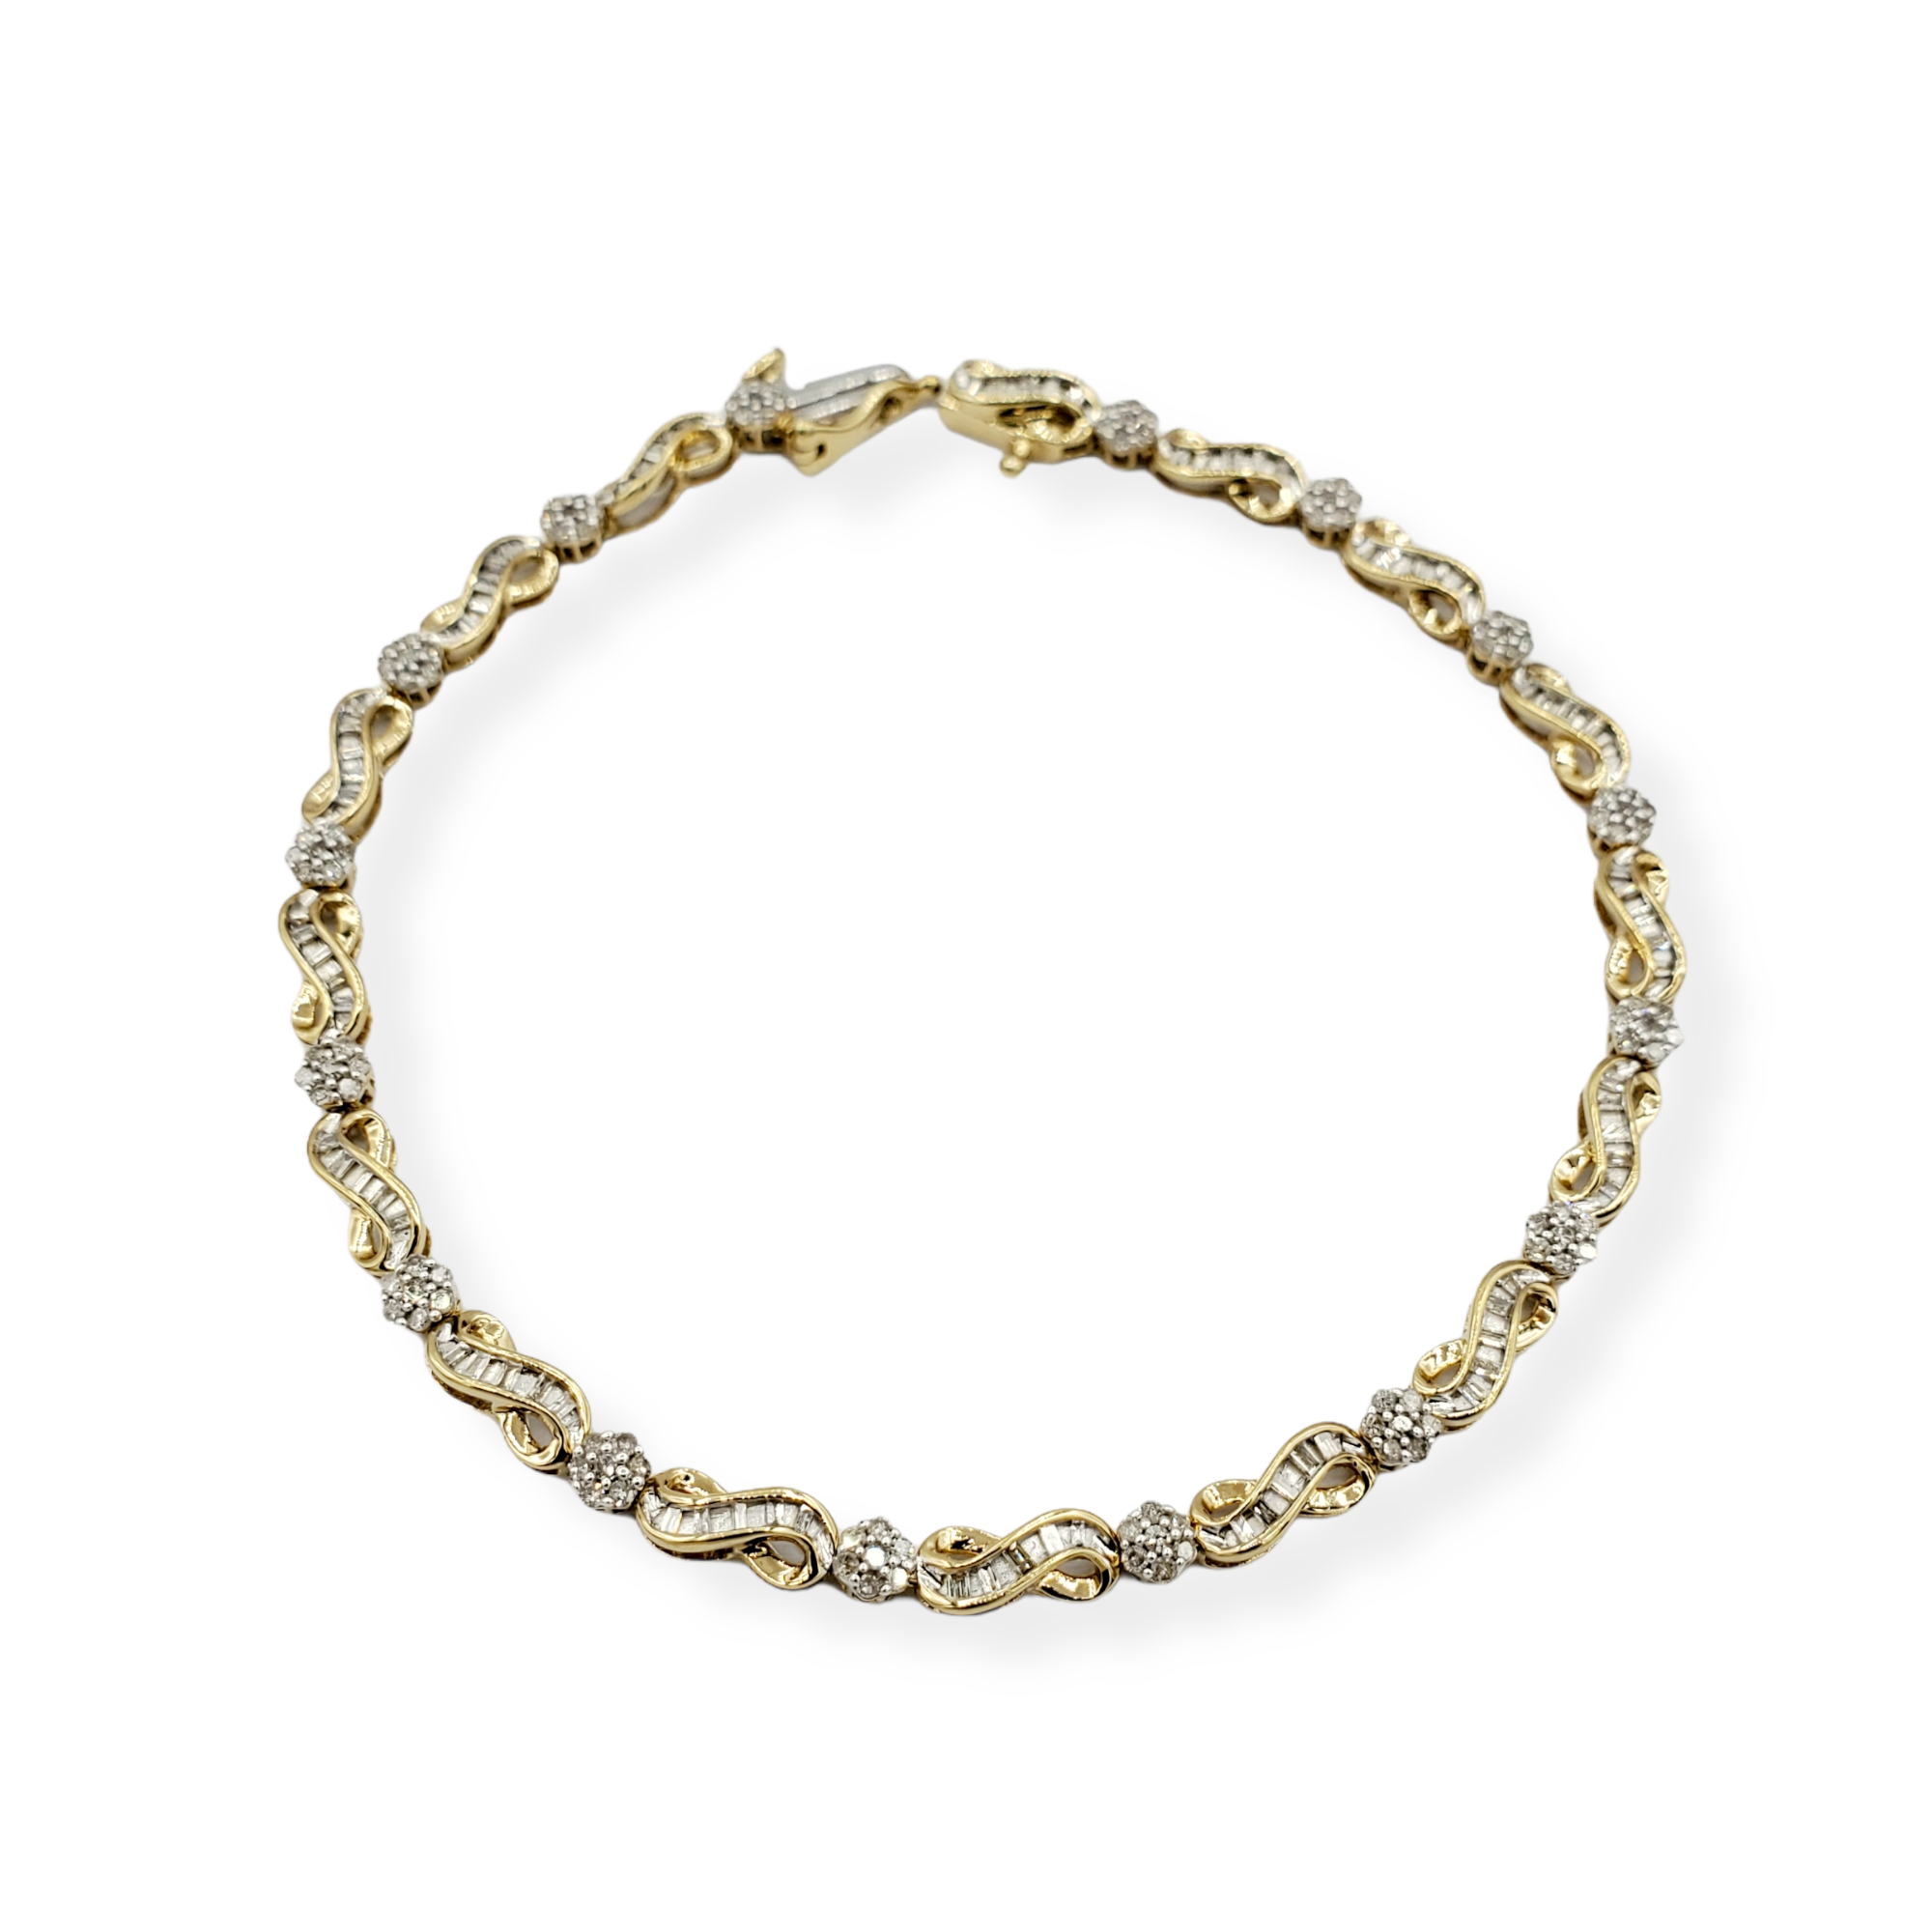 10kt yellow gold bracelet with a tongue clasp prong set single cut diamonds 1.0ct.